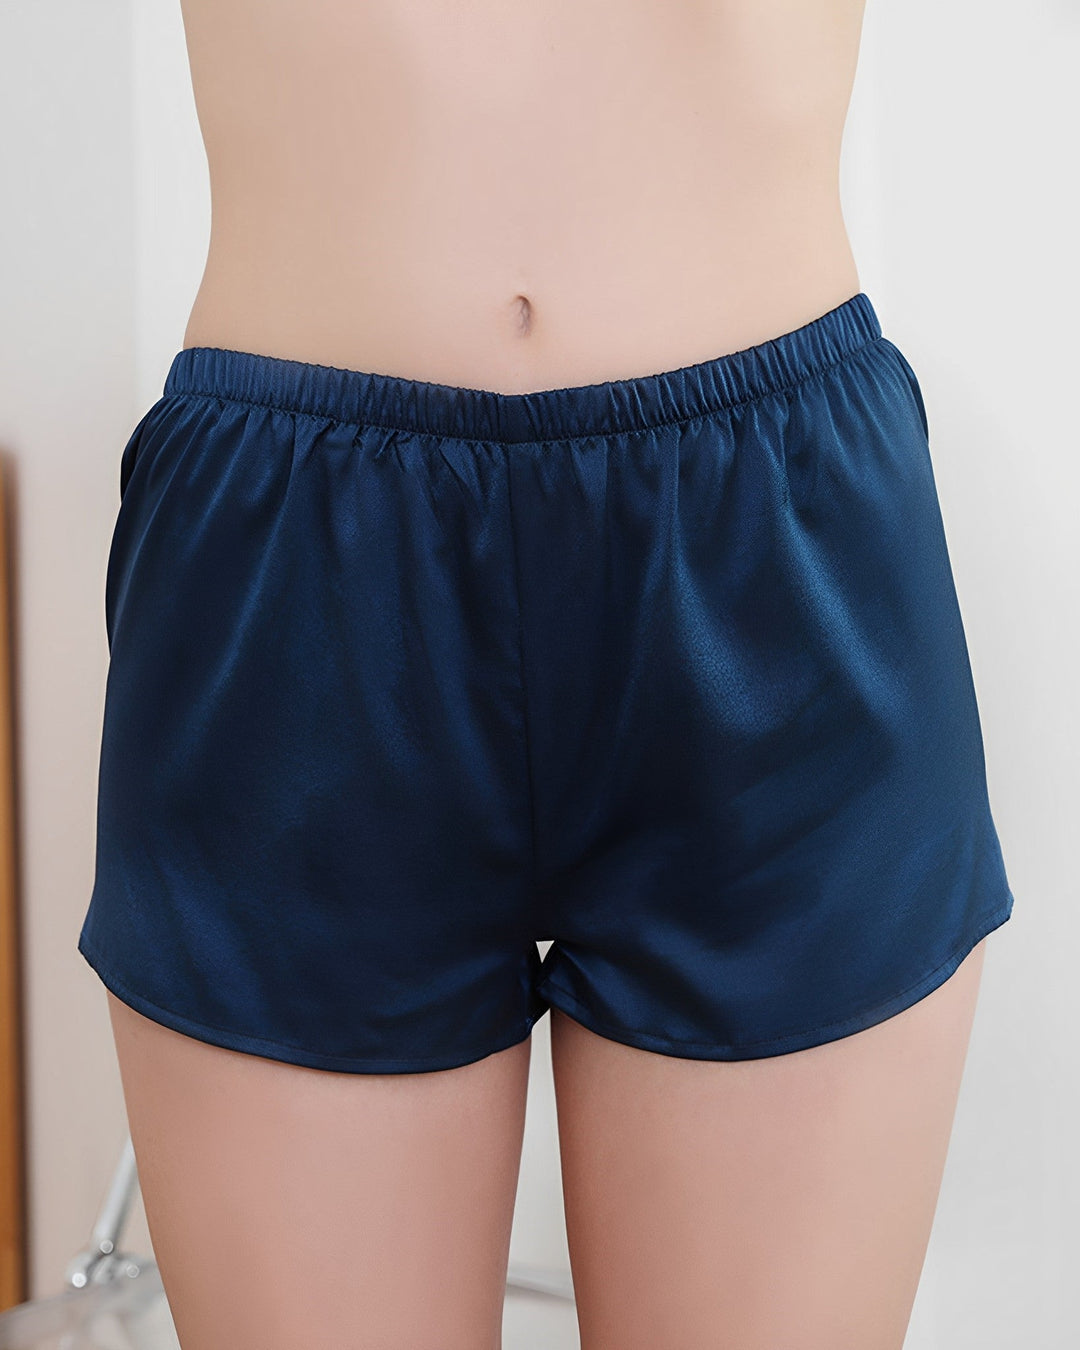 100% Mulberry Silk Panties for Women - Shorts Boxers – SusanSilk